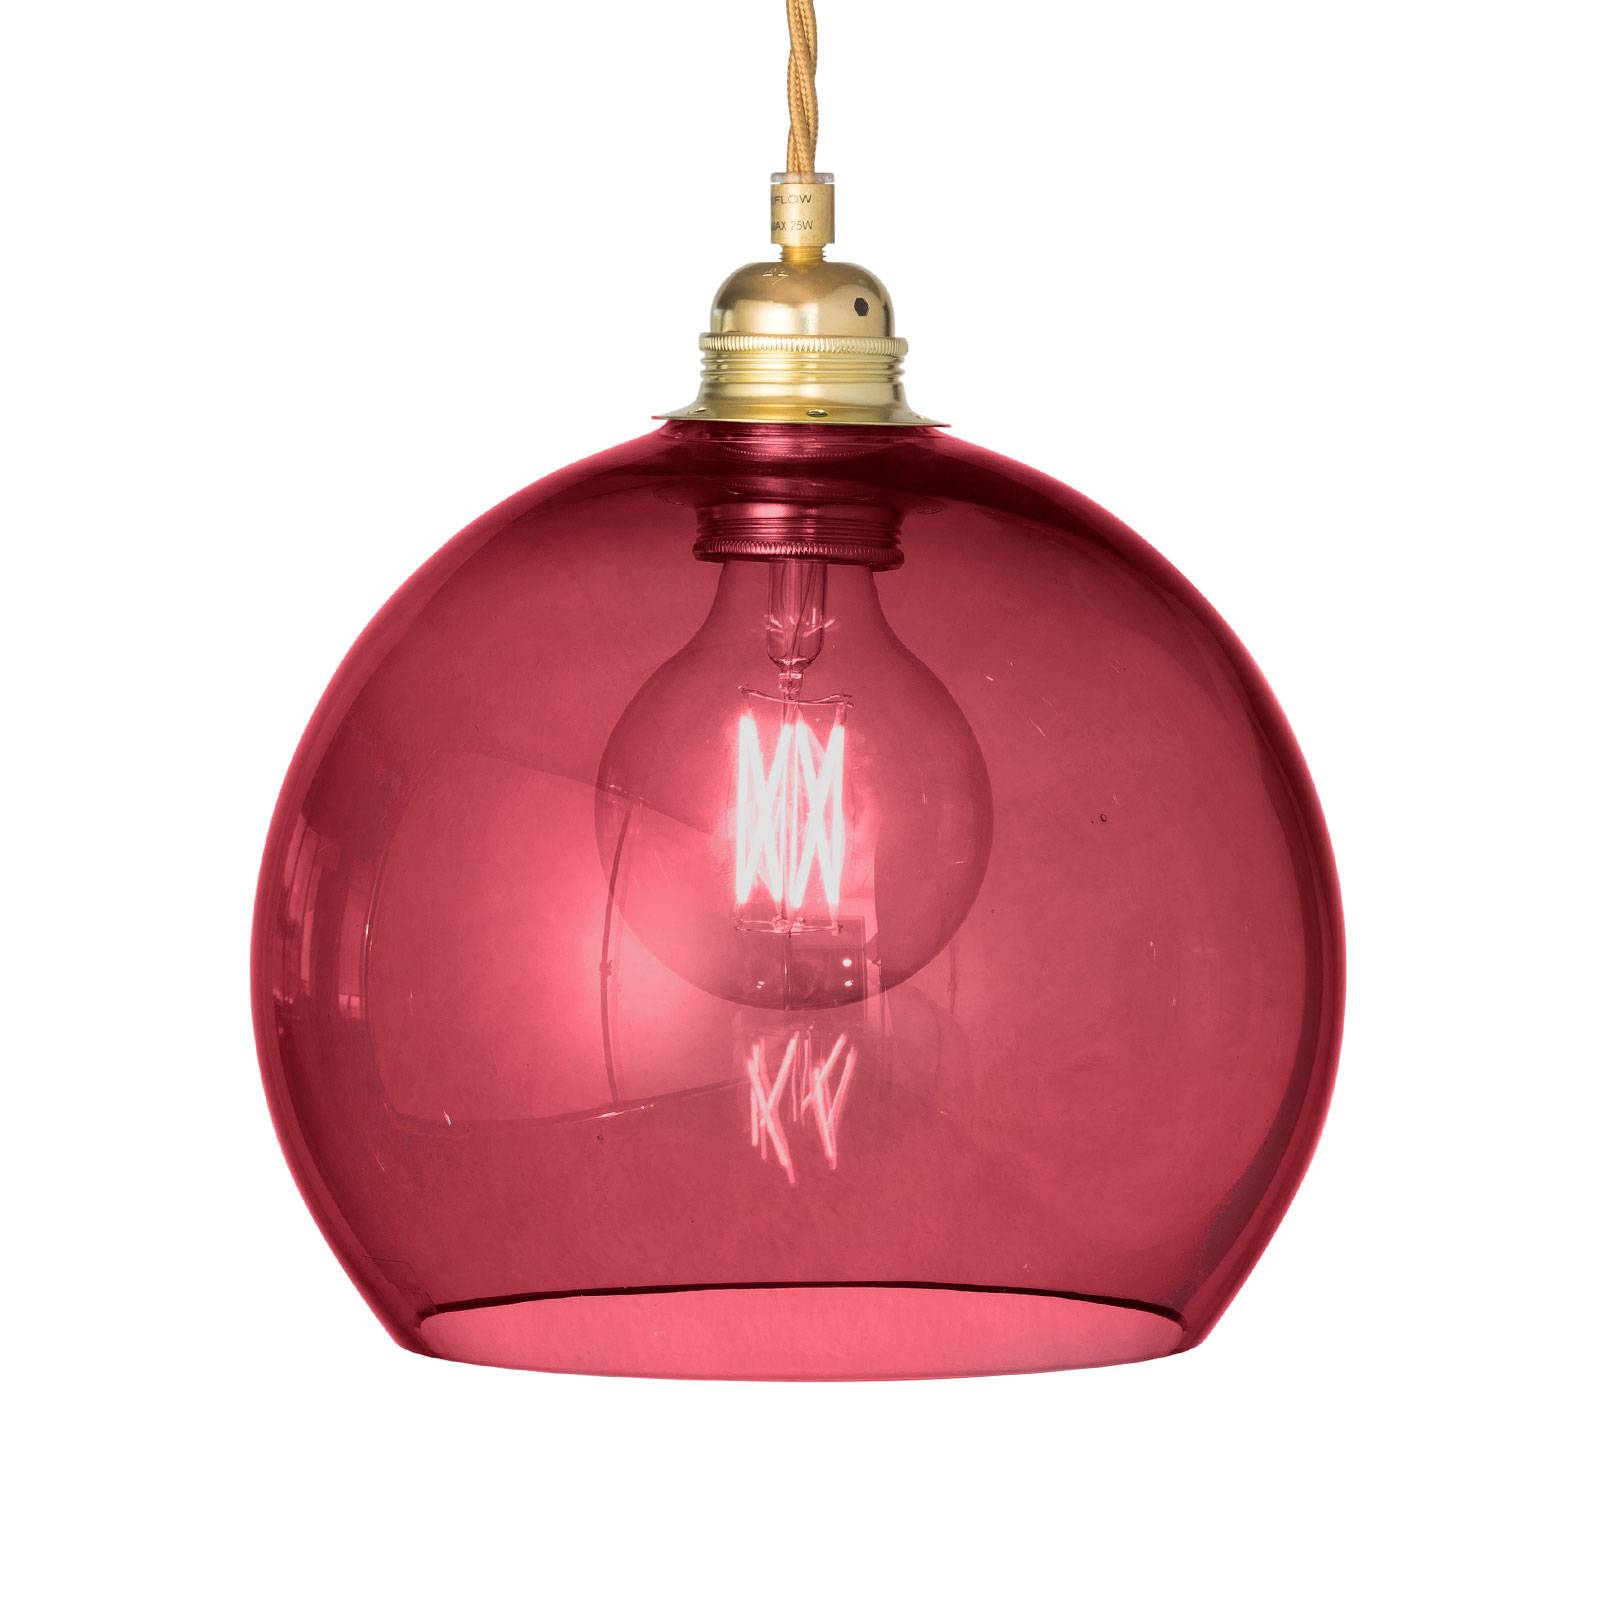 EBB & FLOW Rowan hanglamp goud/rood Ø 22cm